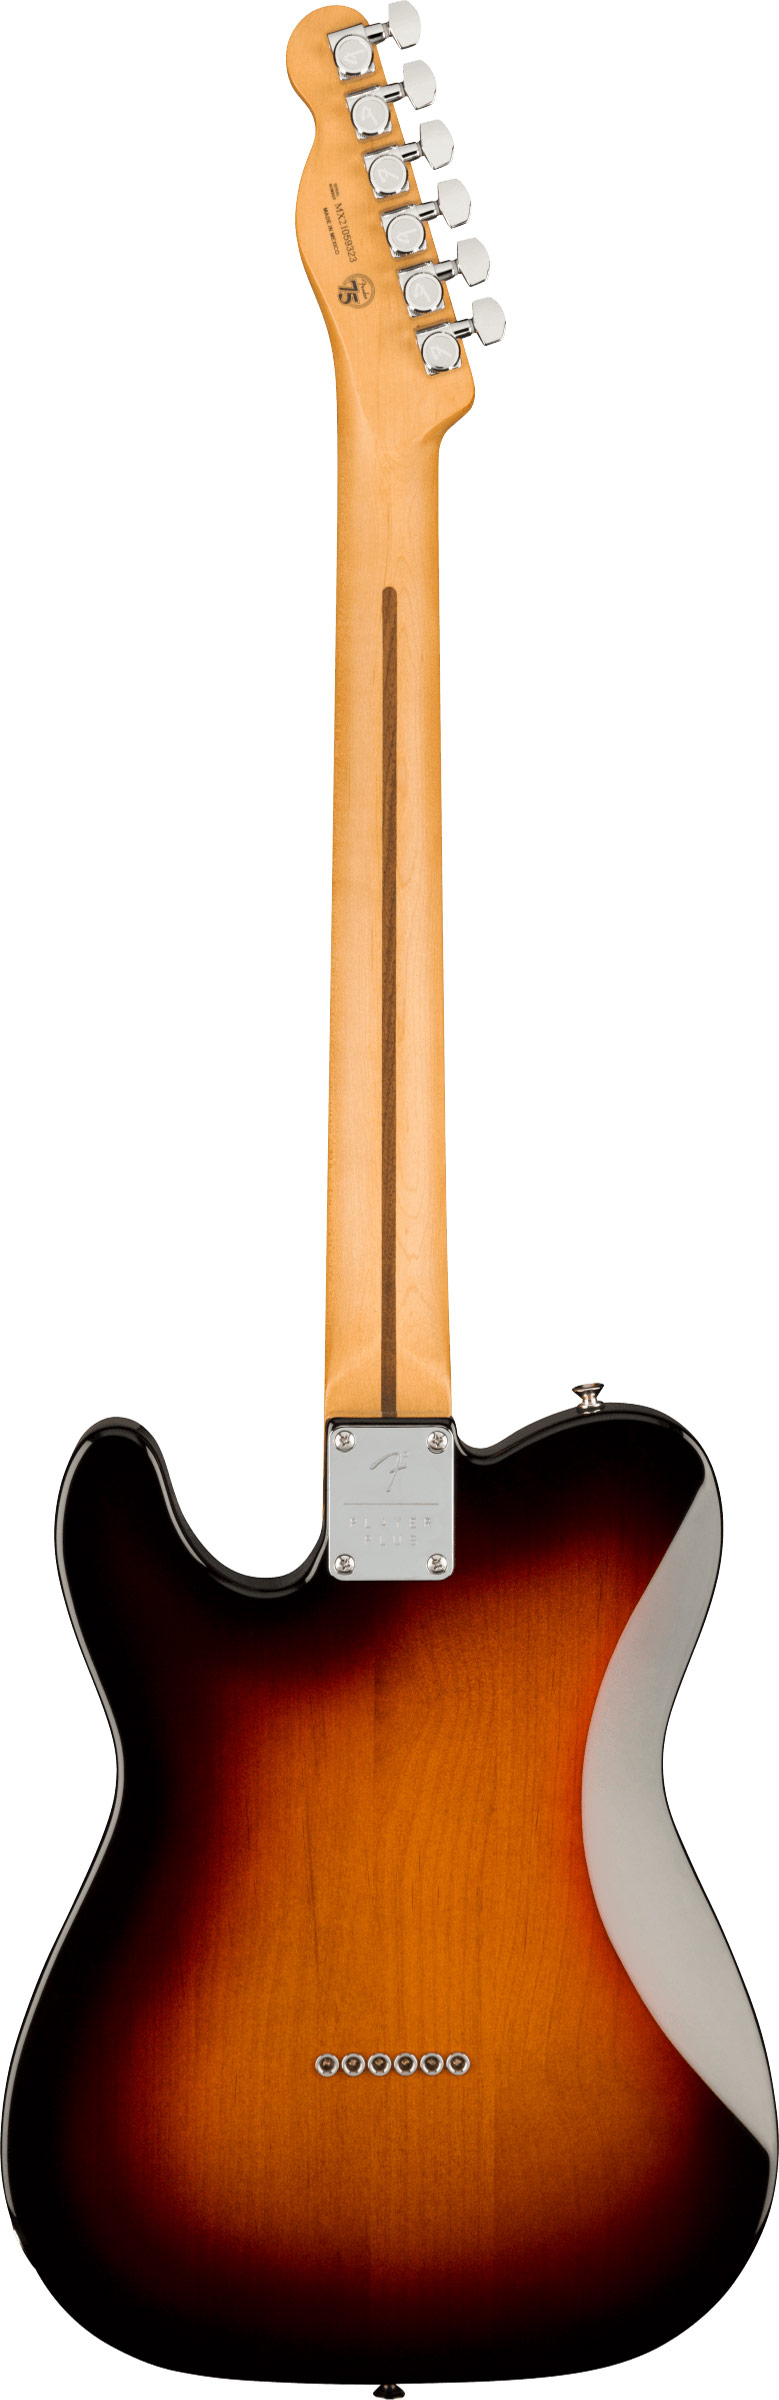 Fingerboard　Tone　Player　Maple　Fender　Plus　Sunburst　Telecaster　guitarguitar